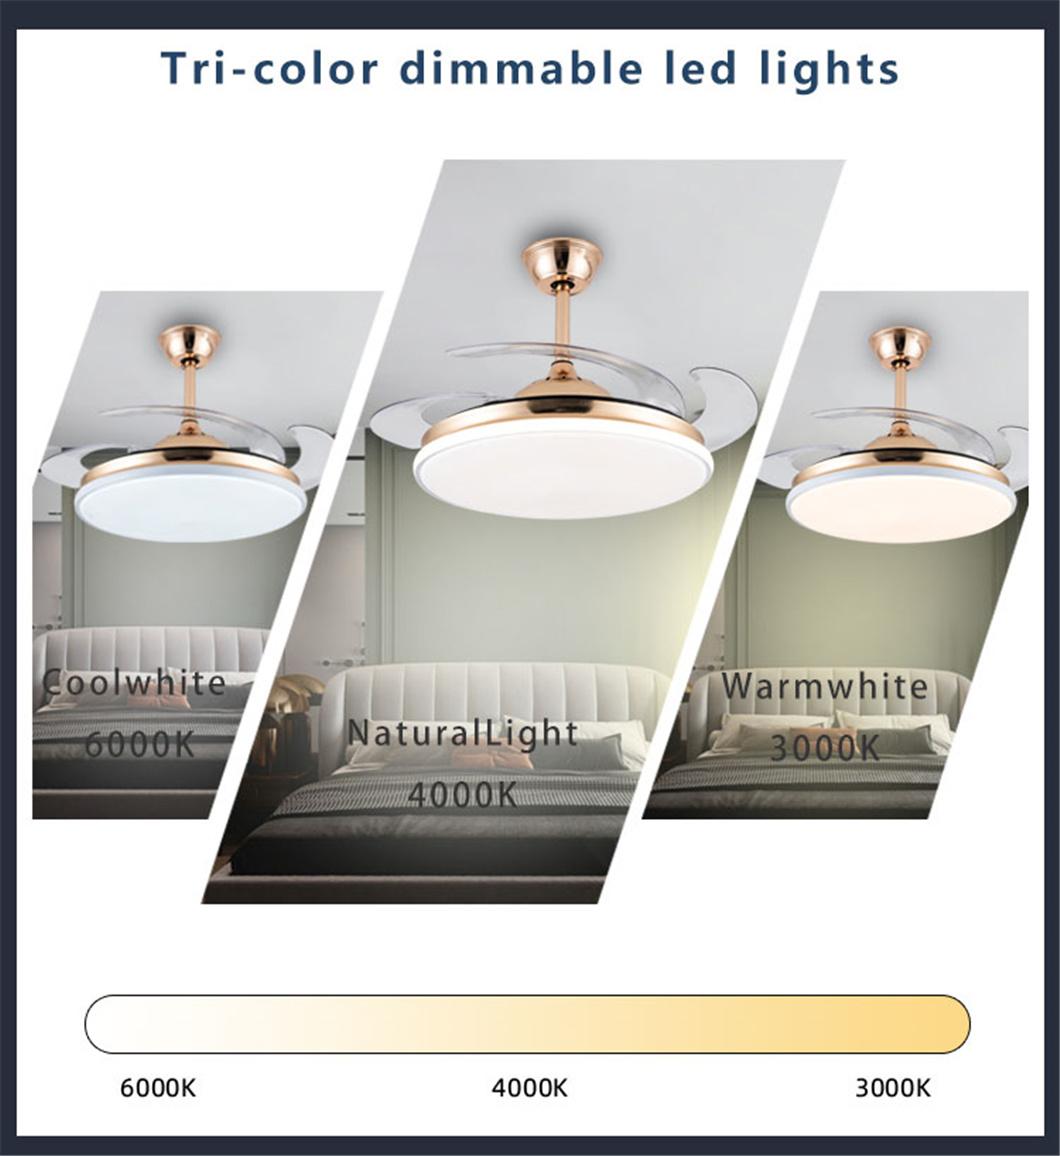 Smart Home Control Clear Acrylic Fan Blades 42 Inch Golden Chandelier Light with Fan